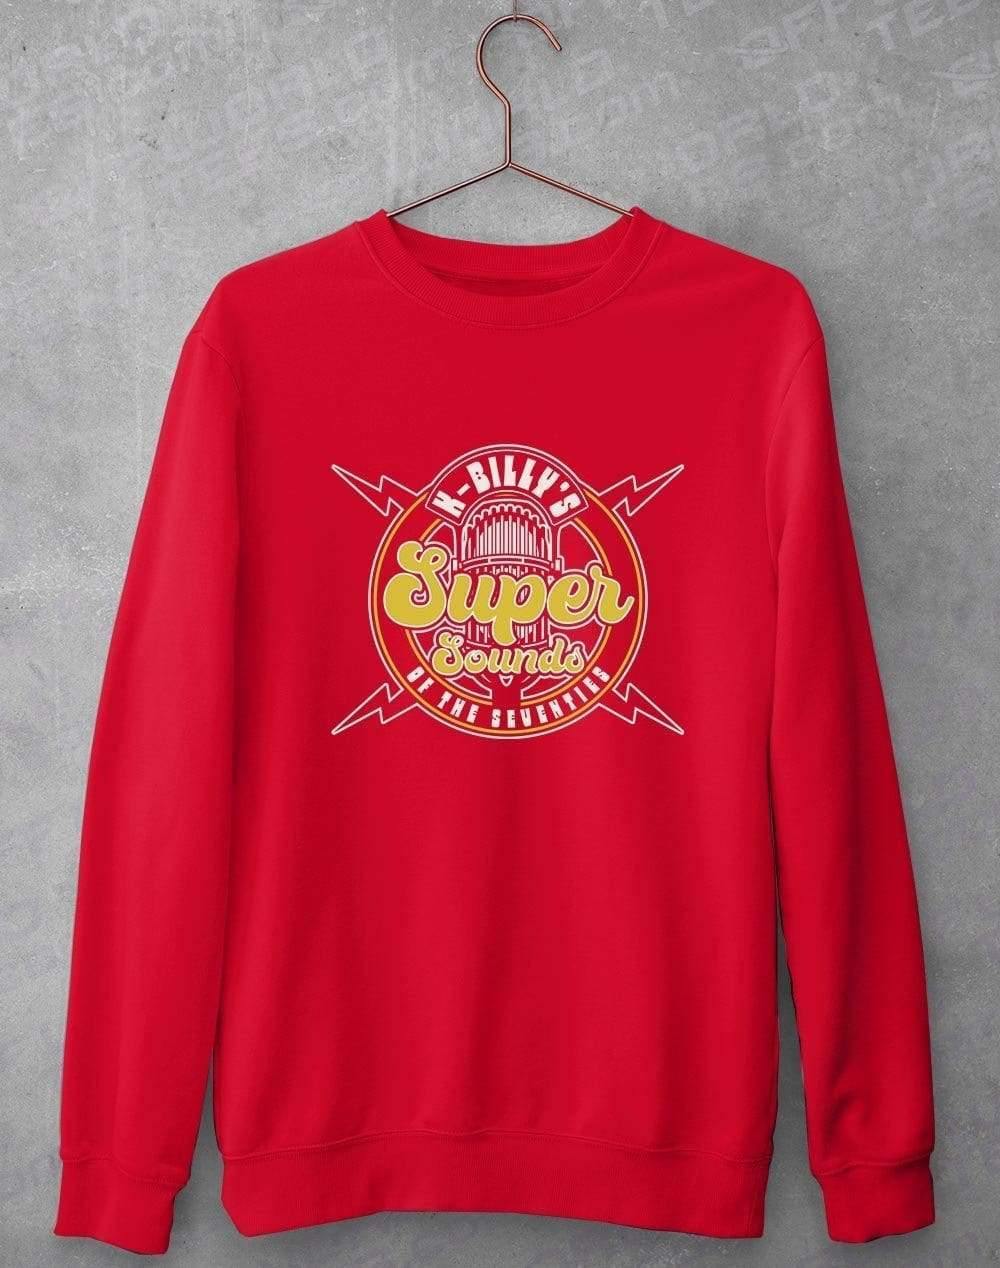 K Billys Super Sounds of the Seventies Sweatshirt S / Red  - Off World Tees